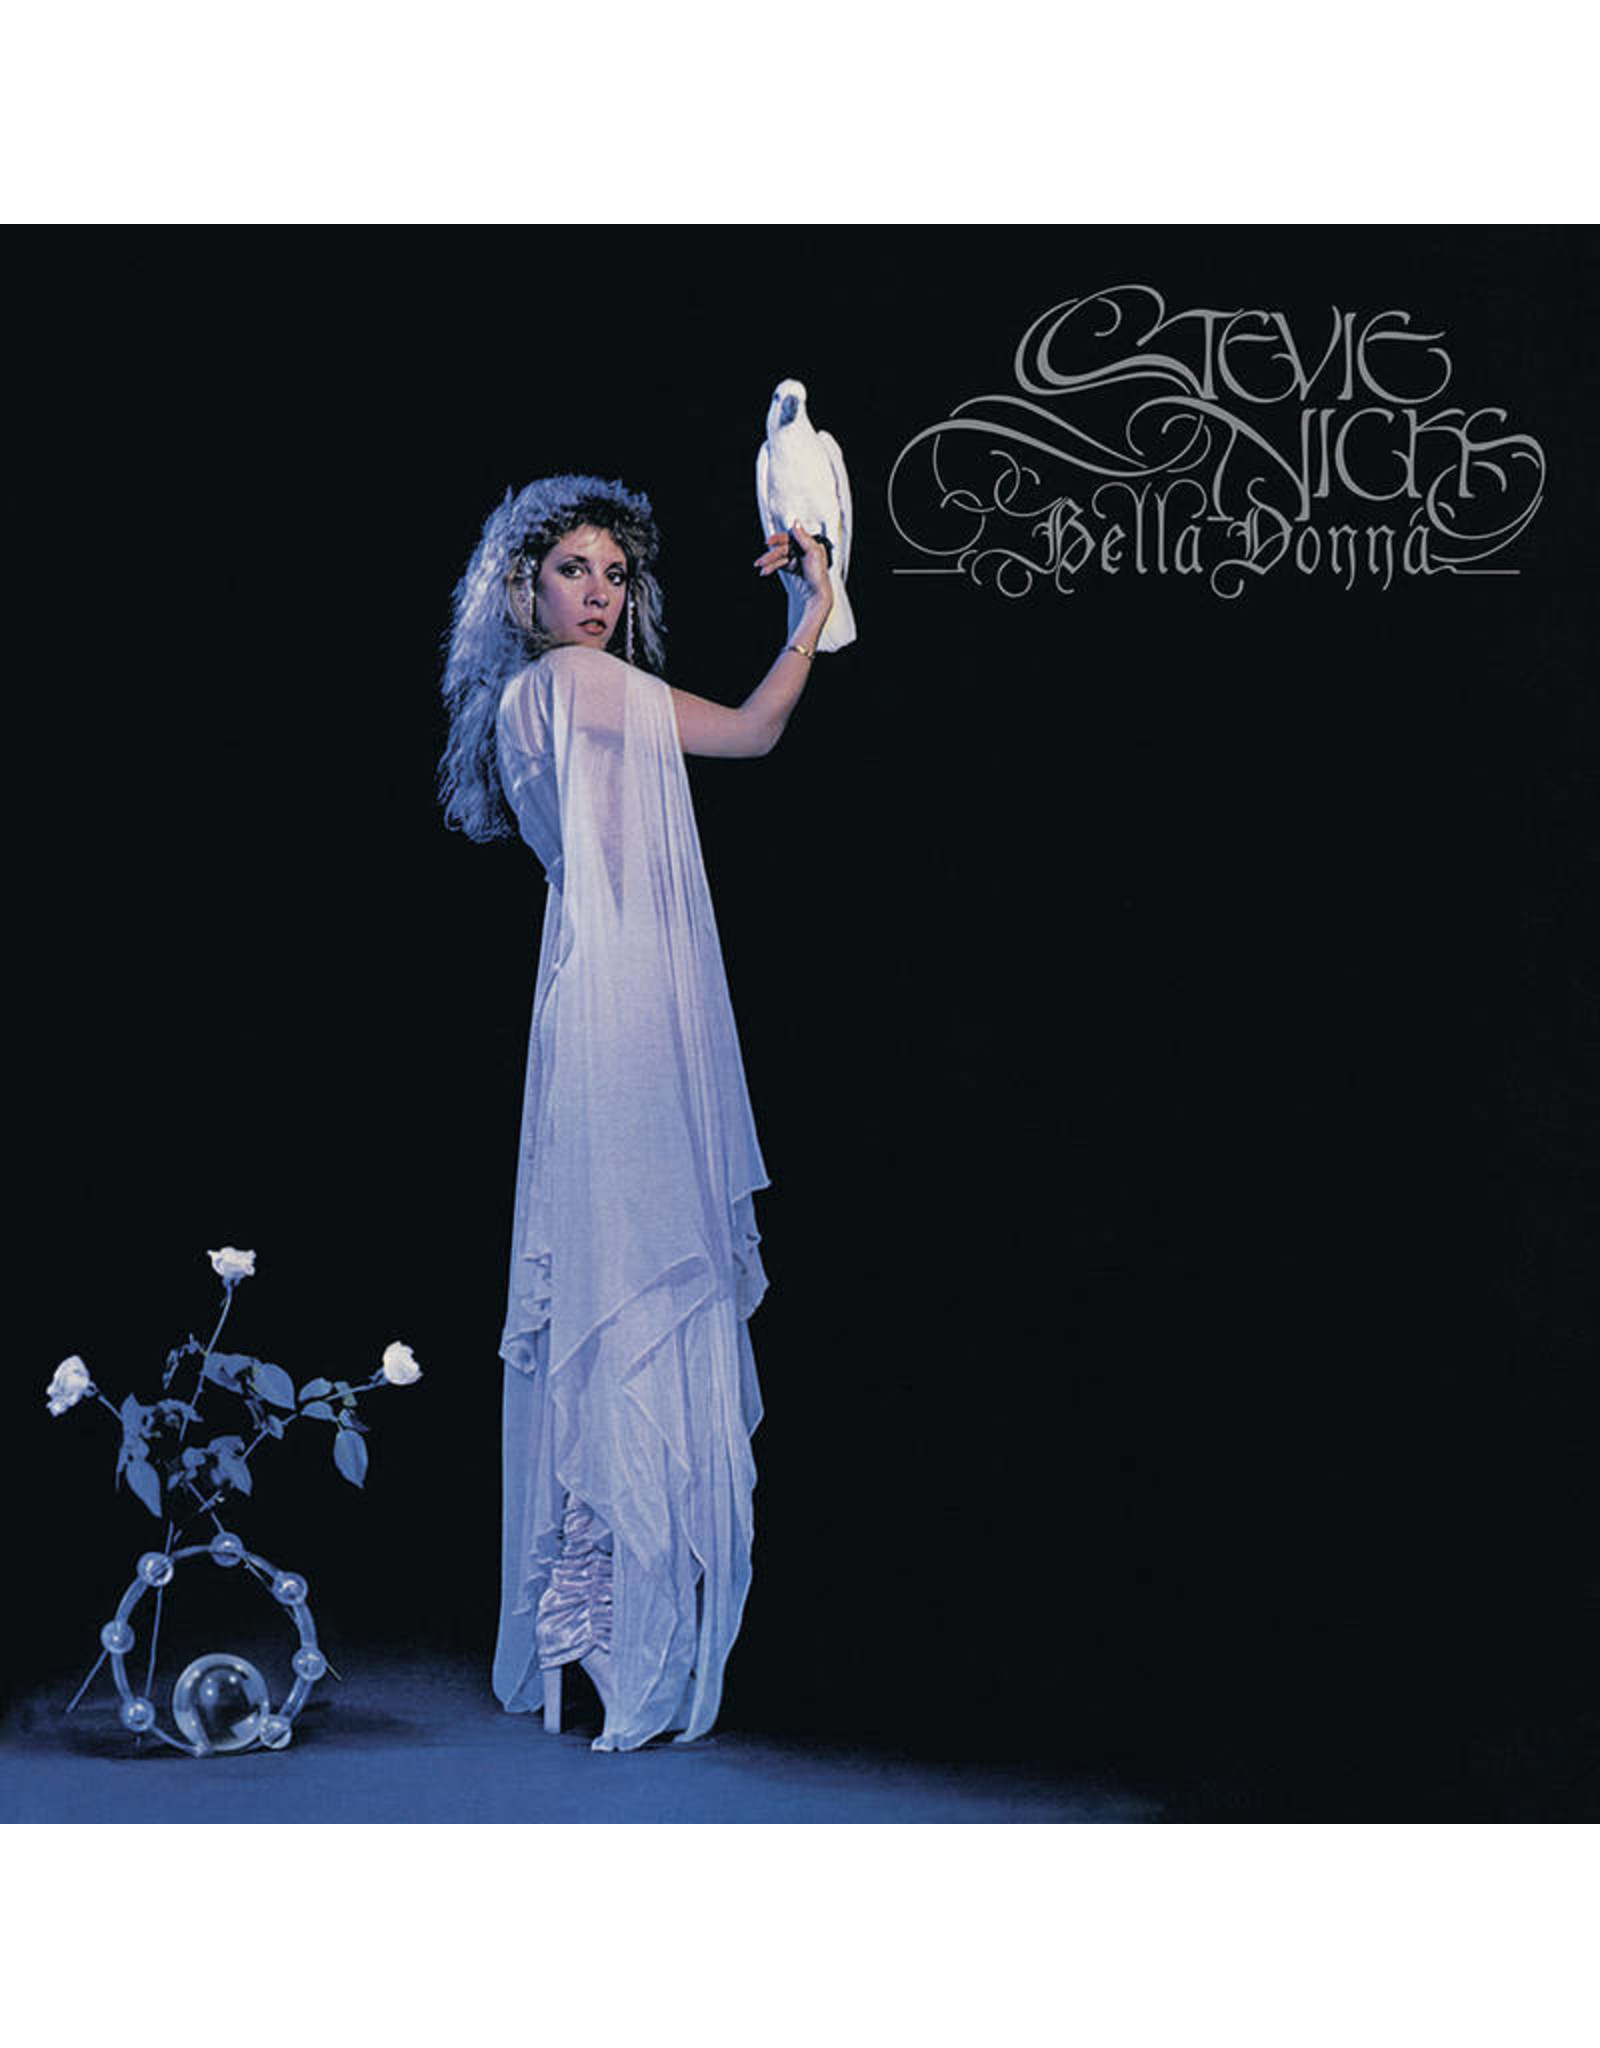 Stevie Nicks - Bella Donna (Exclusive Deluxe Edition)